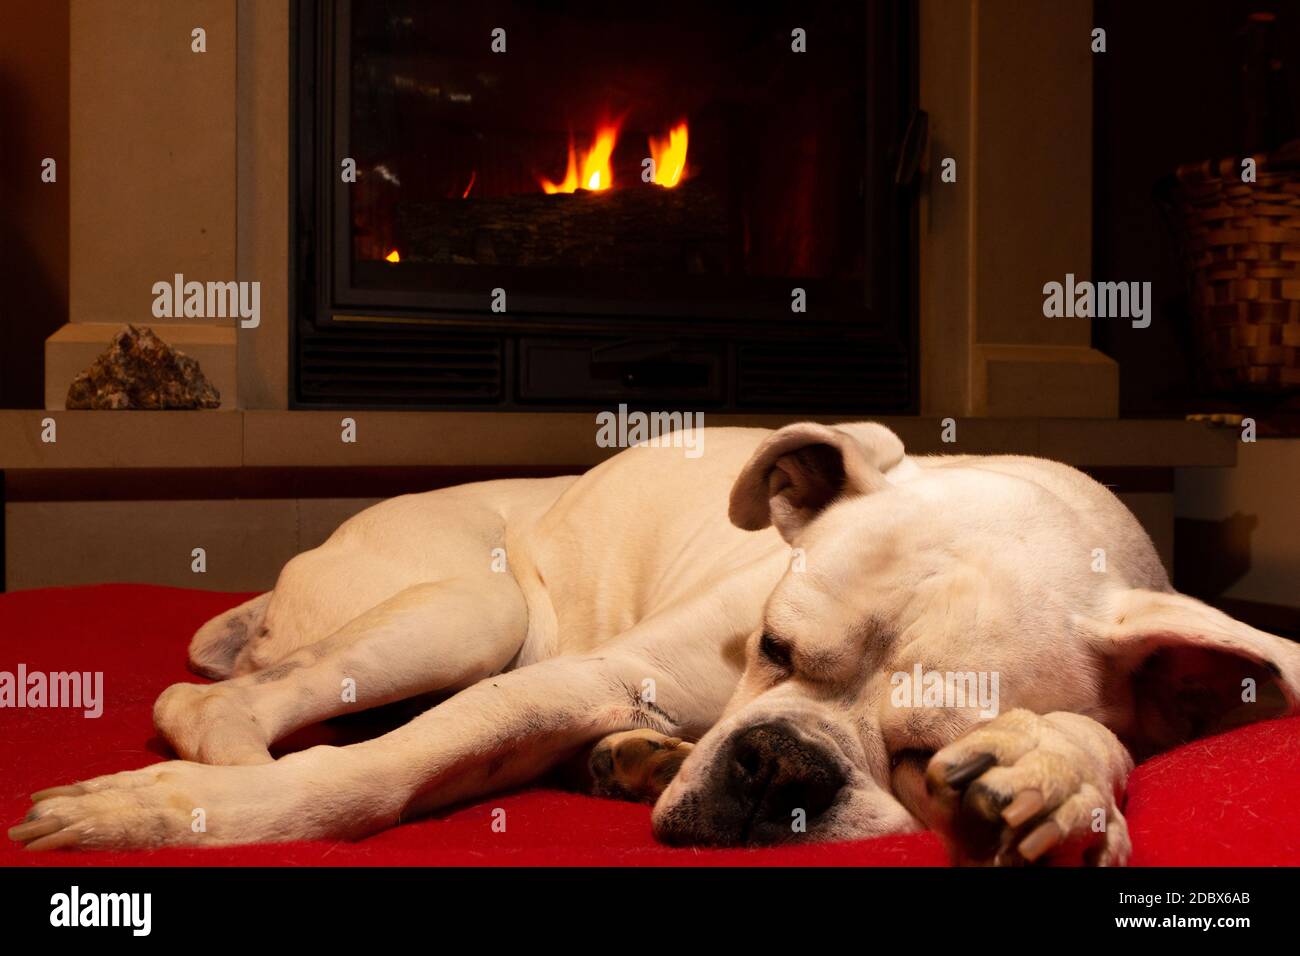 White boxer dog sleeping on a red rug near the burning fireplace. Resting dog. Stock Photo